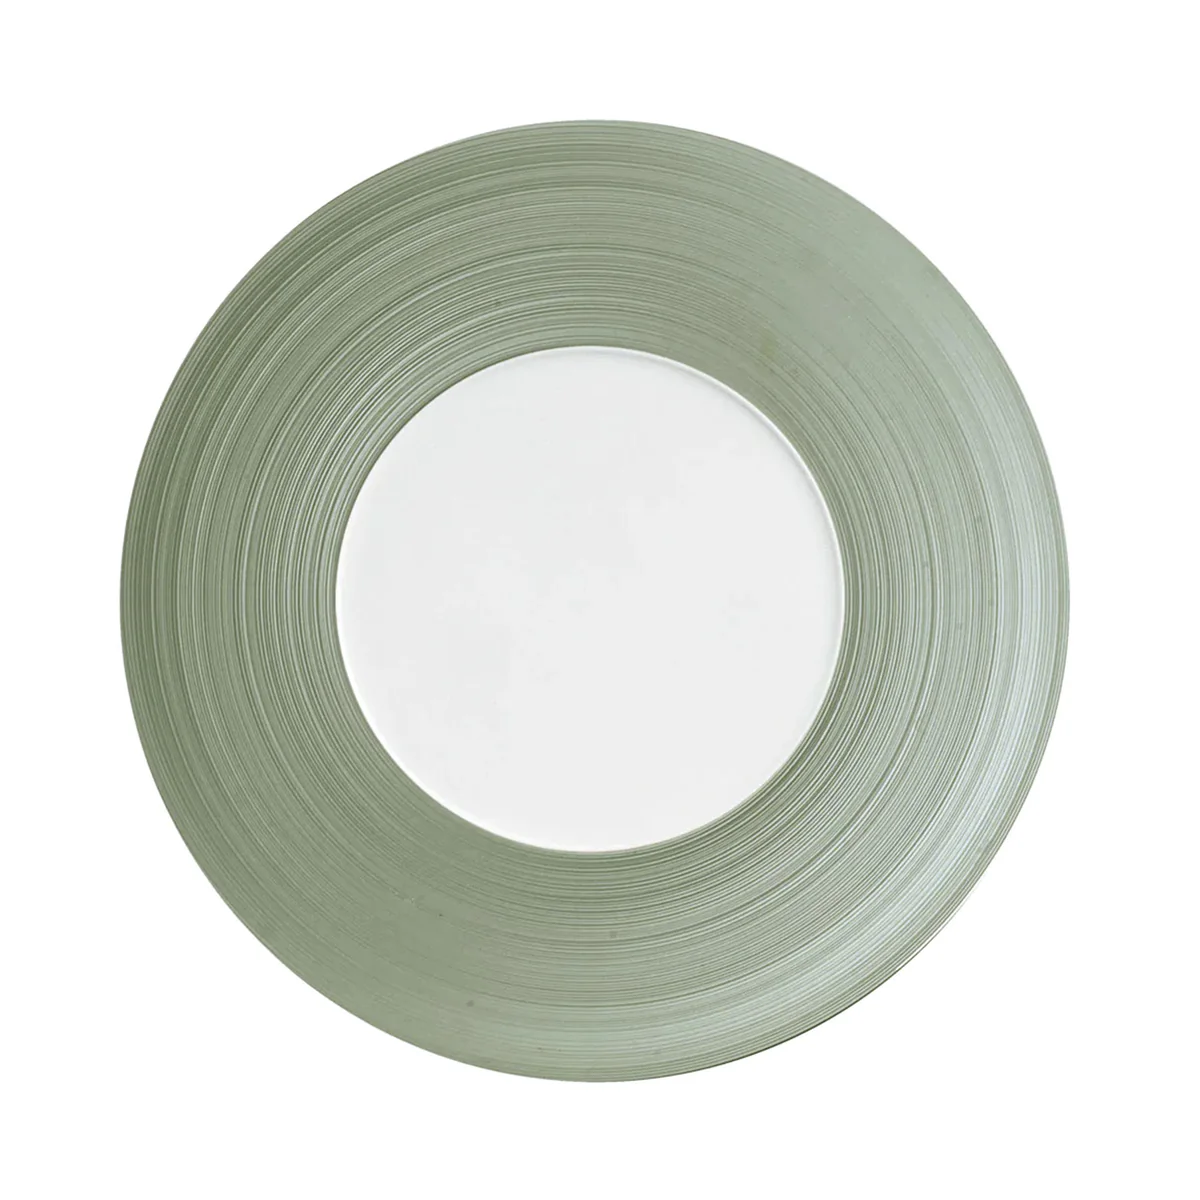 HEMISPHERE Khaki Green - 29 cm plate